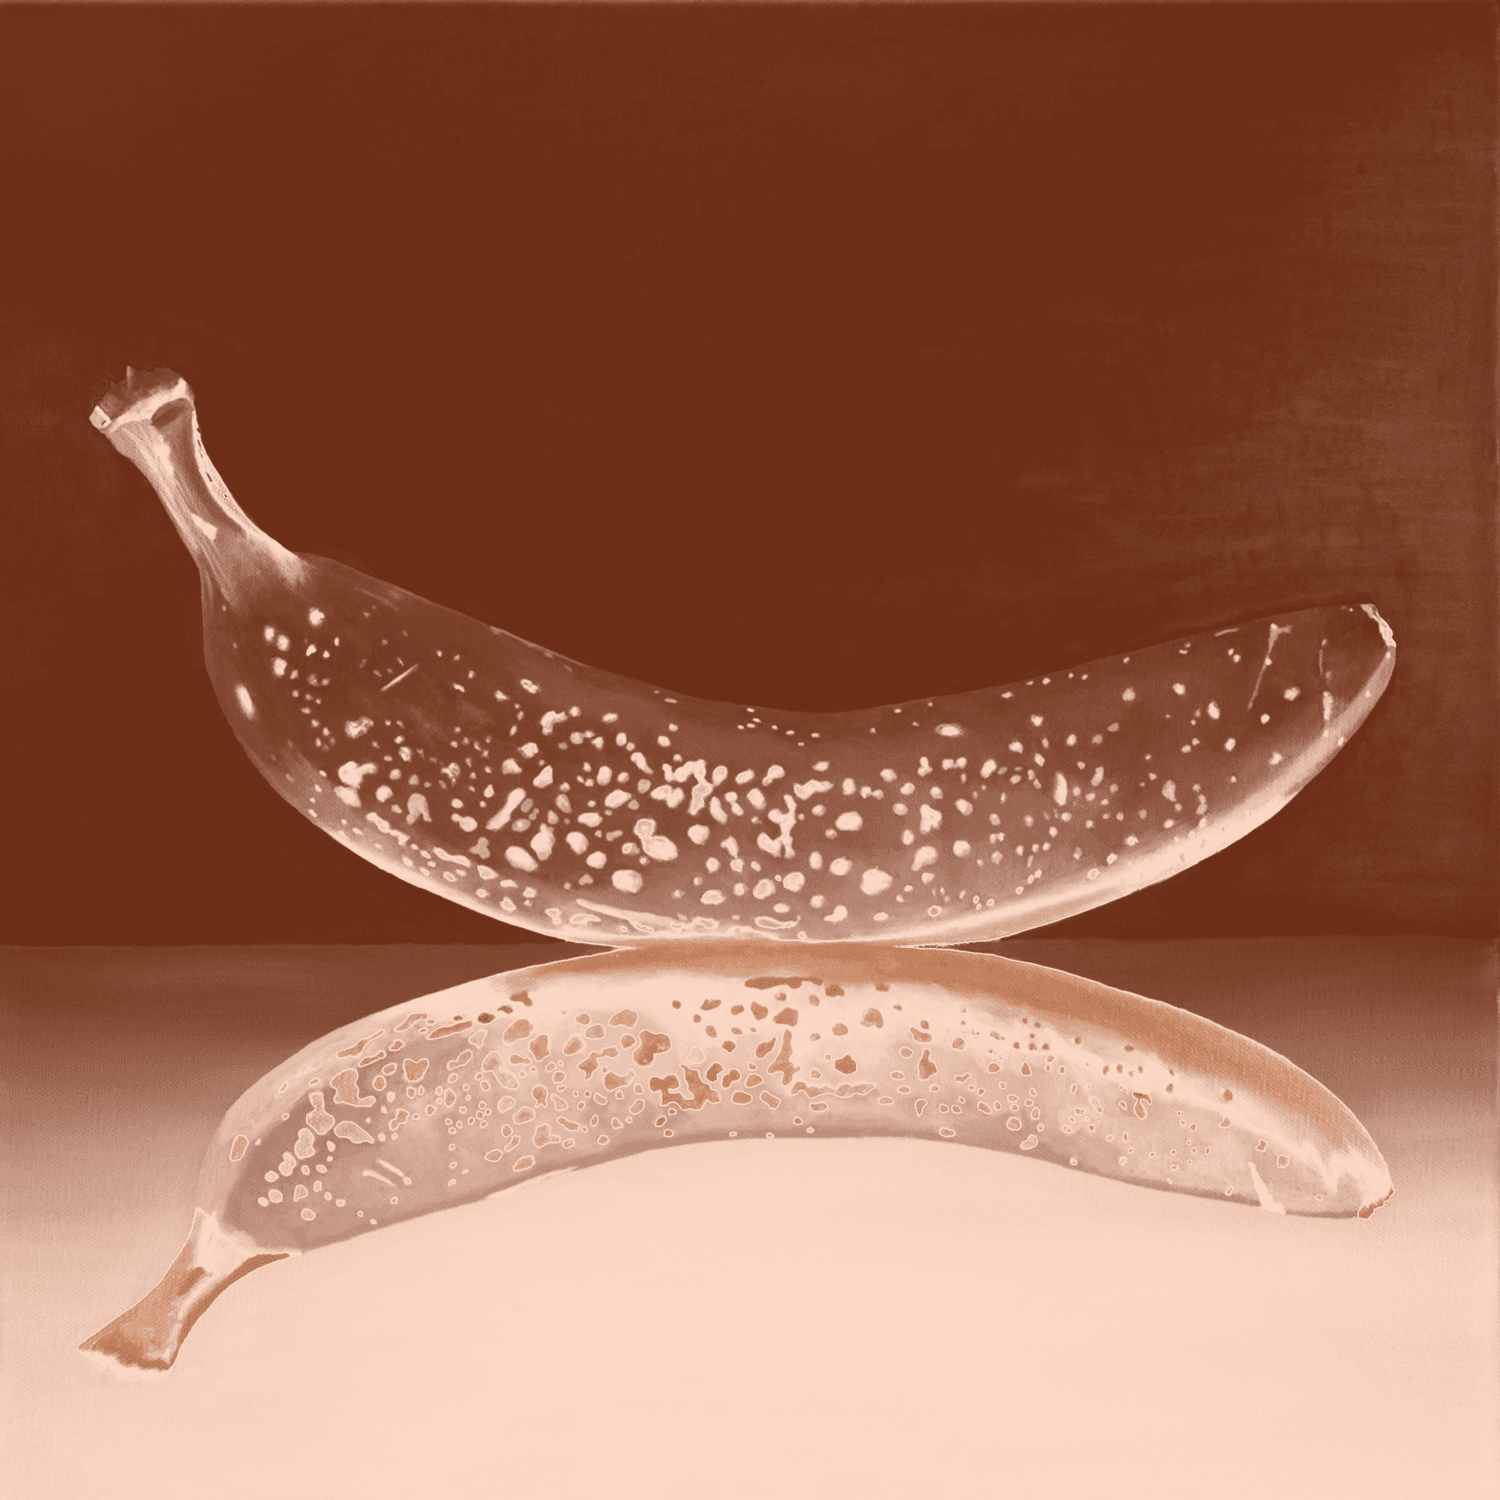 Maki Art - Banana digital edition no.9